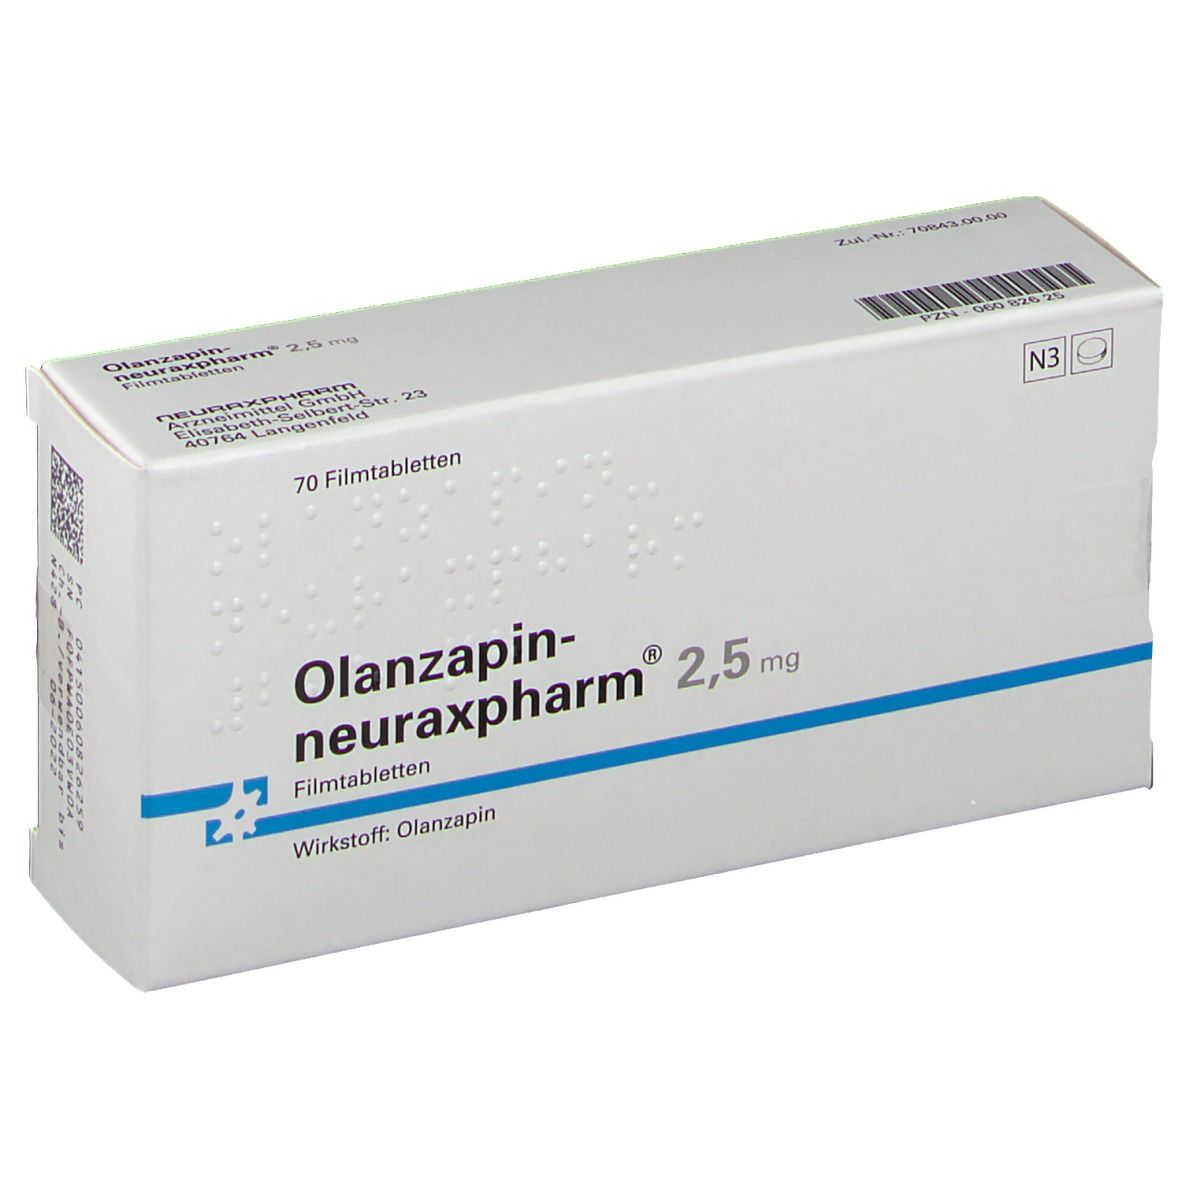 Olanzapin-neuraxpharm® 2,5 mg